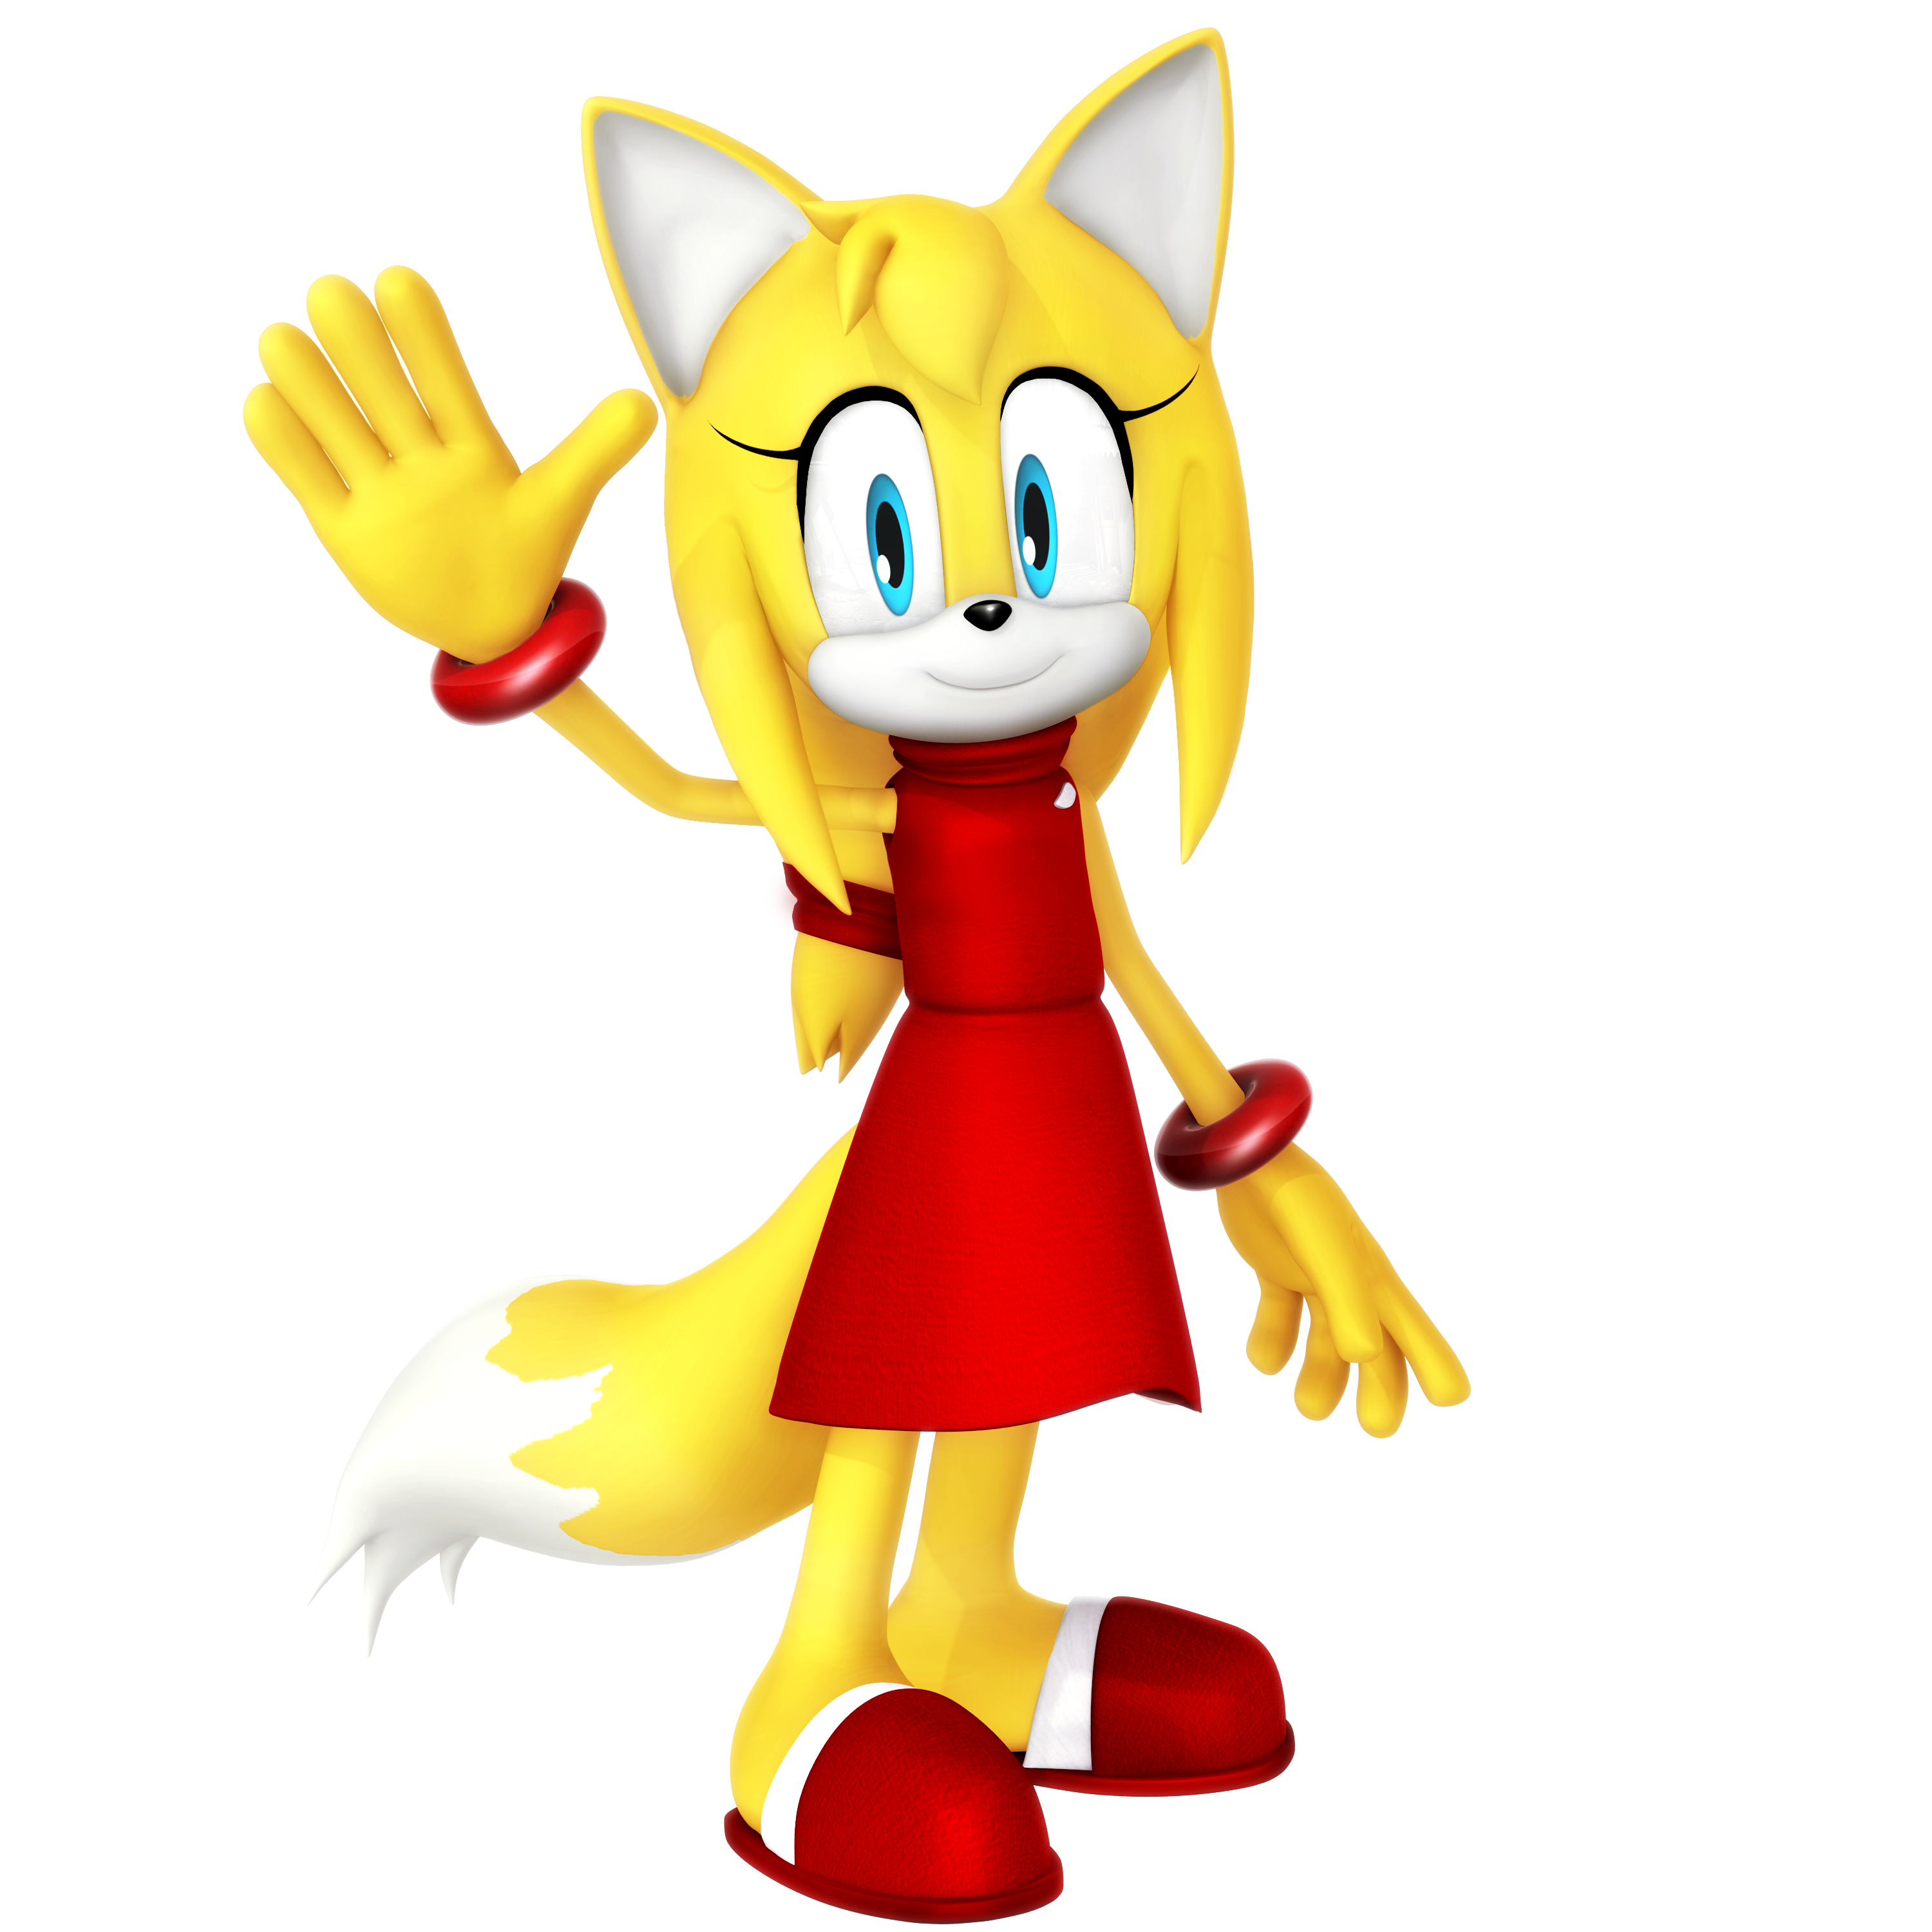 sonic the hedgehog girl characters fox